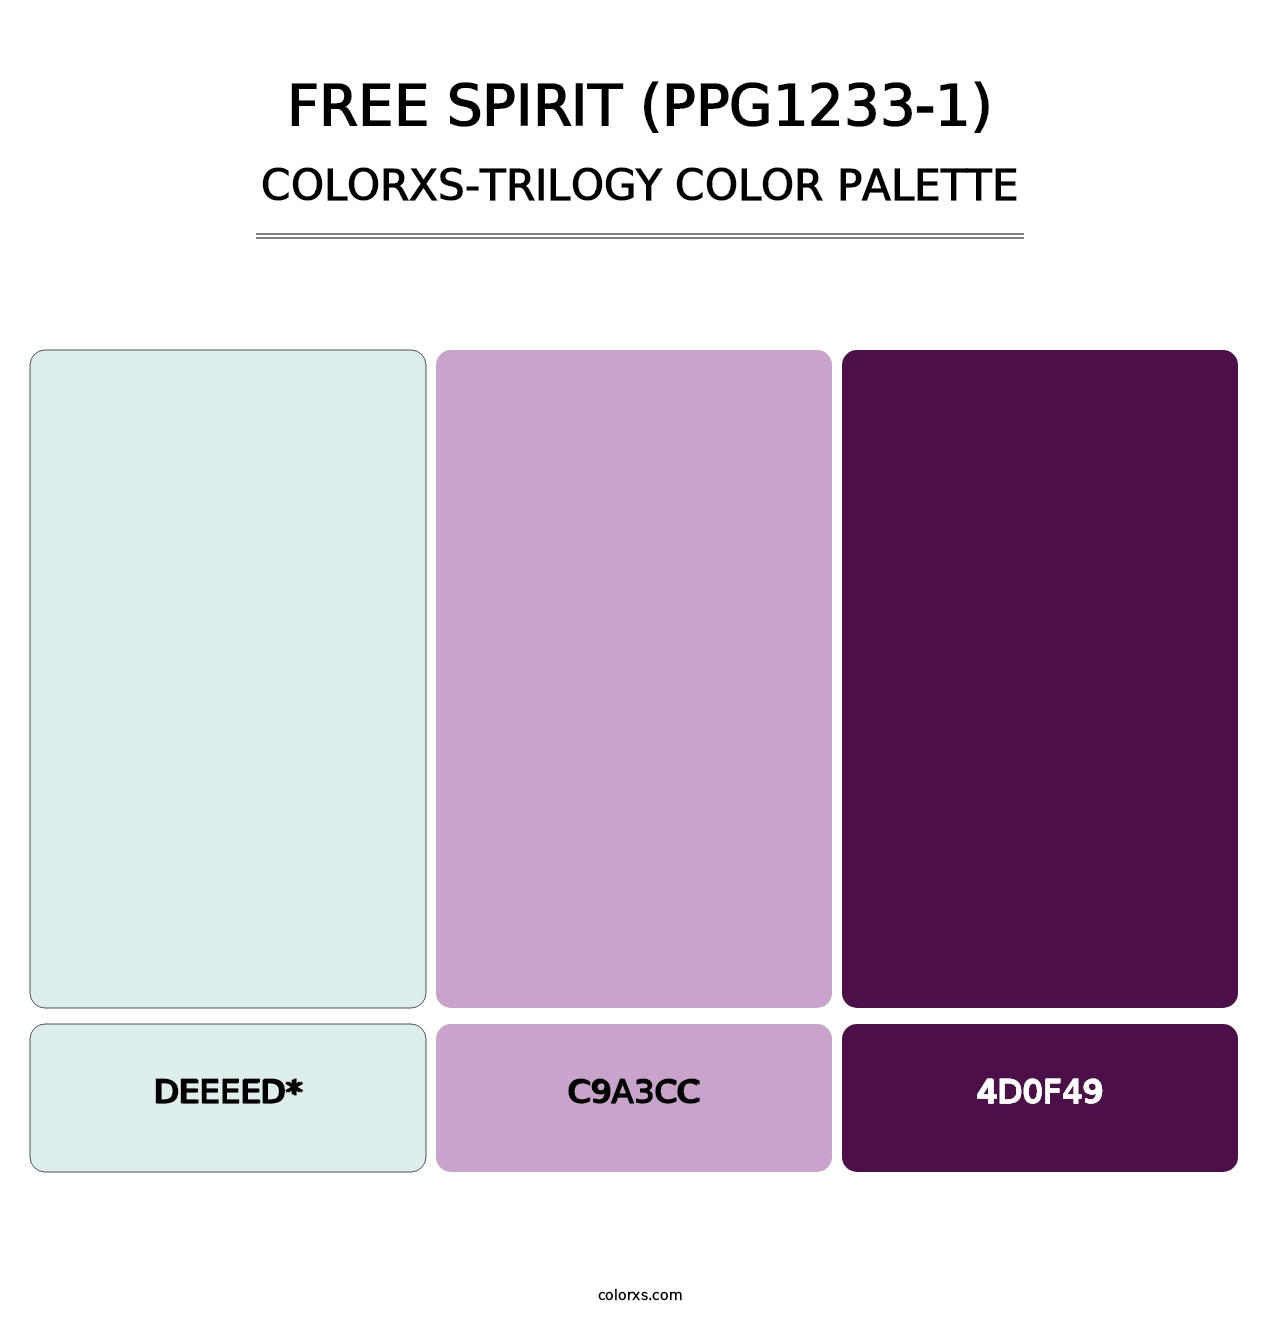 Free Spirit (PPG1233-1) - Colorxs Trilogy Palette